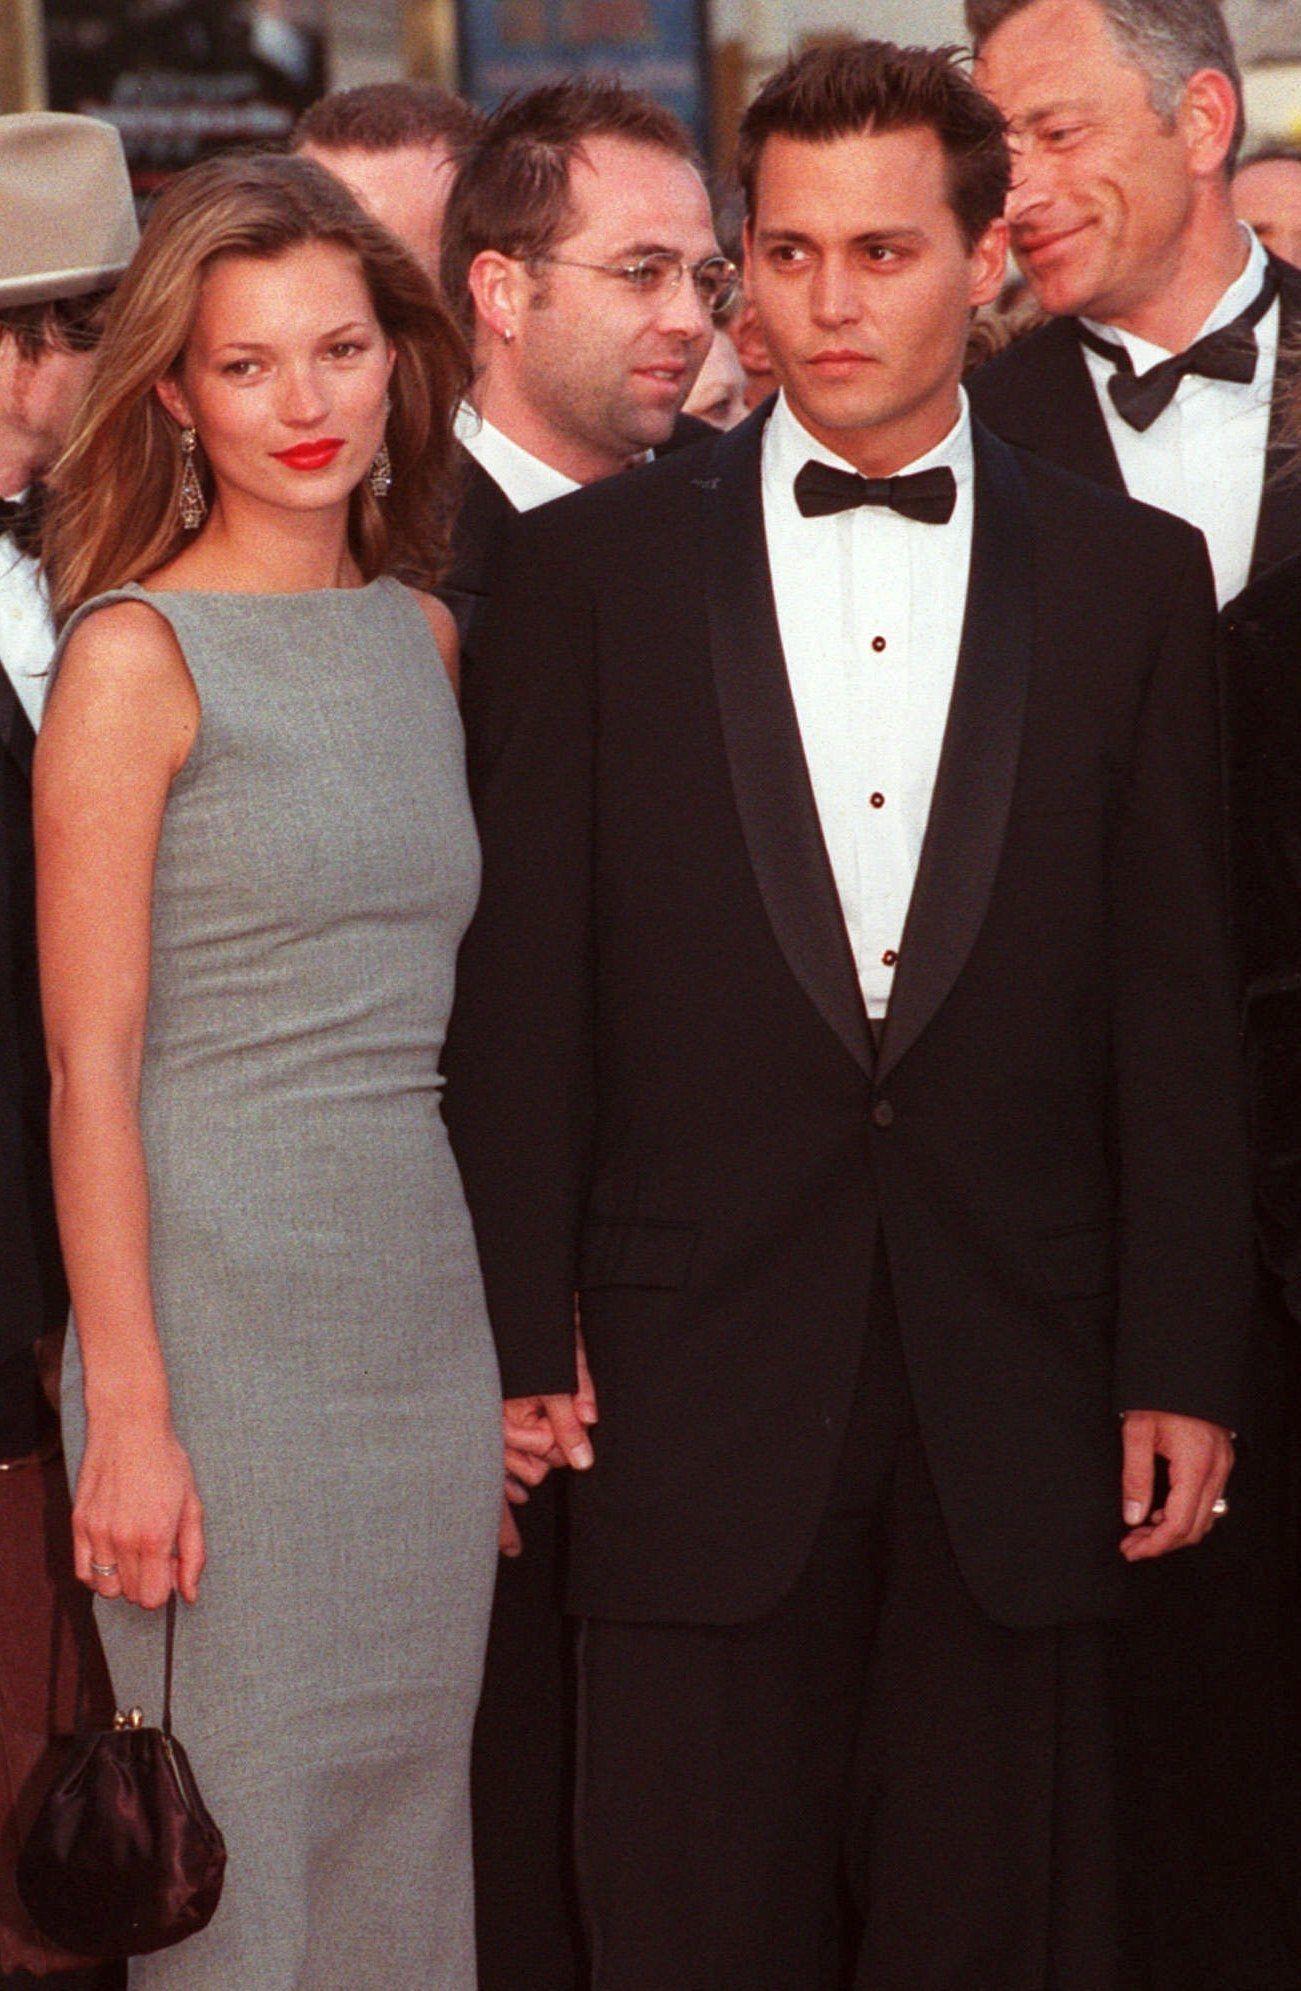 VAKKERT PAR: Her er Moss og Depp fimfestivalen i Cannes i 1997. Moss i en enkel lyseblå kjole og bling i ørene, og Depp i smoking. Foto: Remy de la Mauviniere, AP